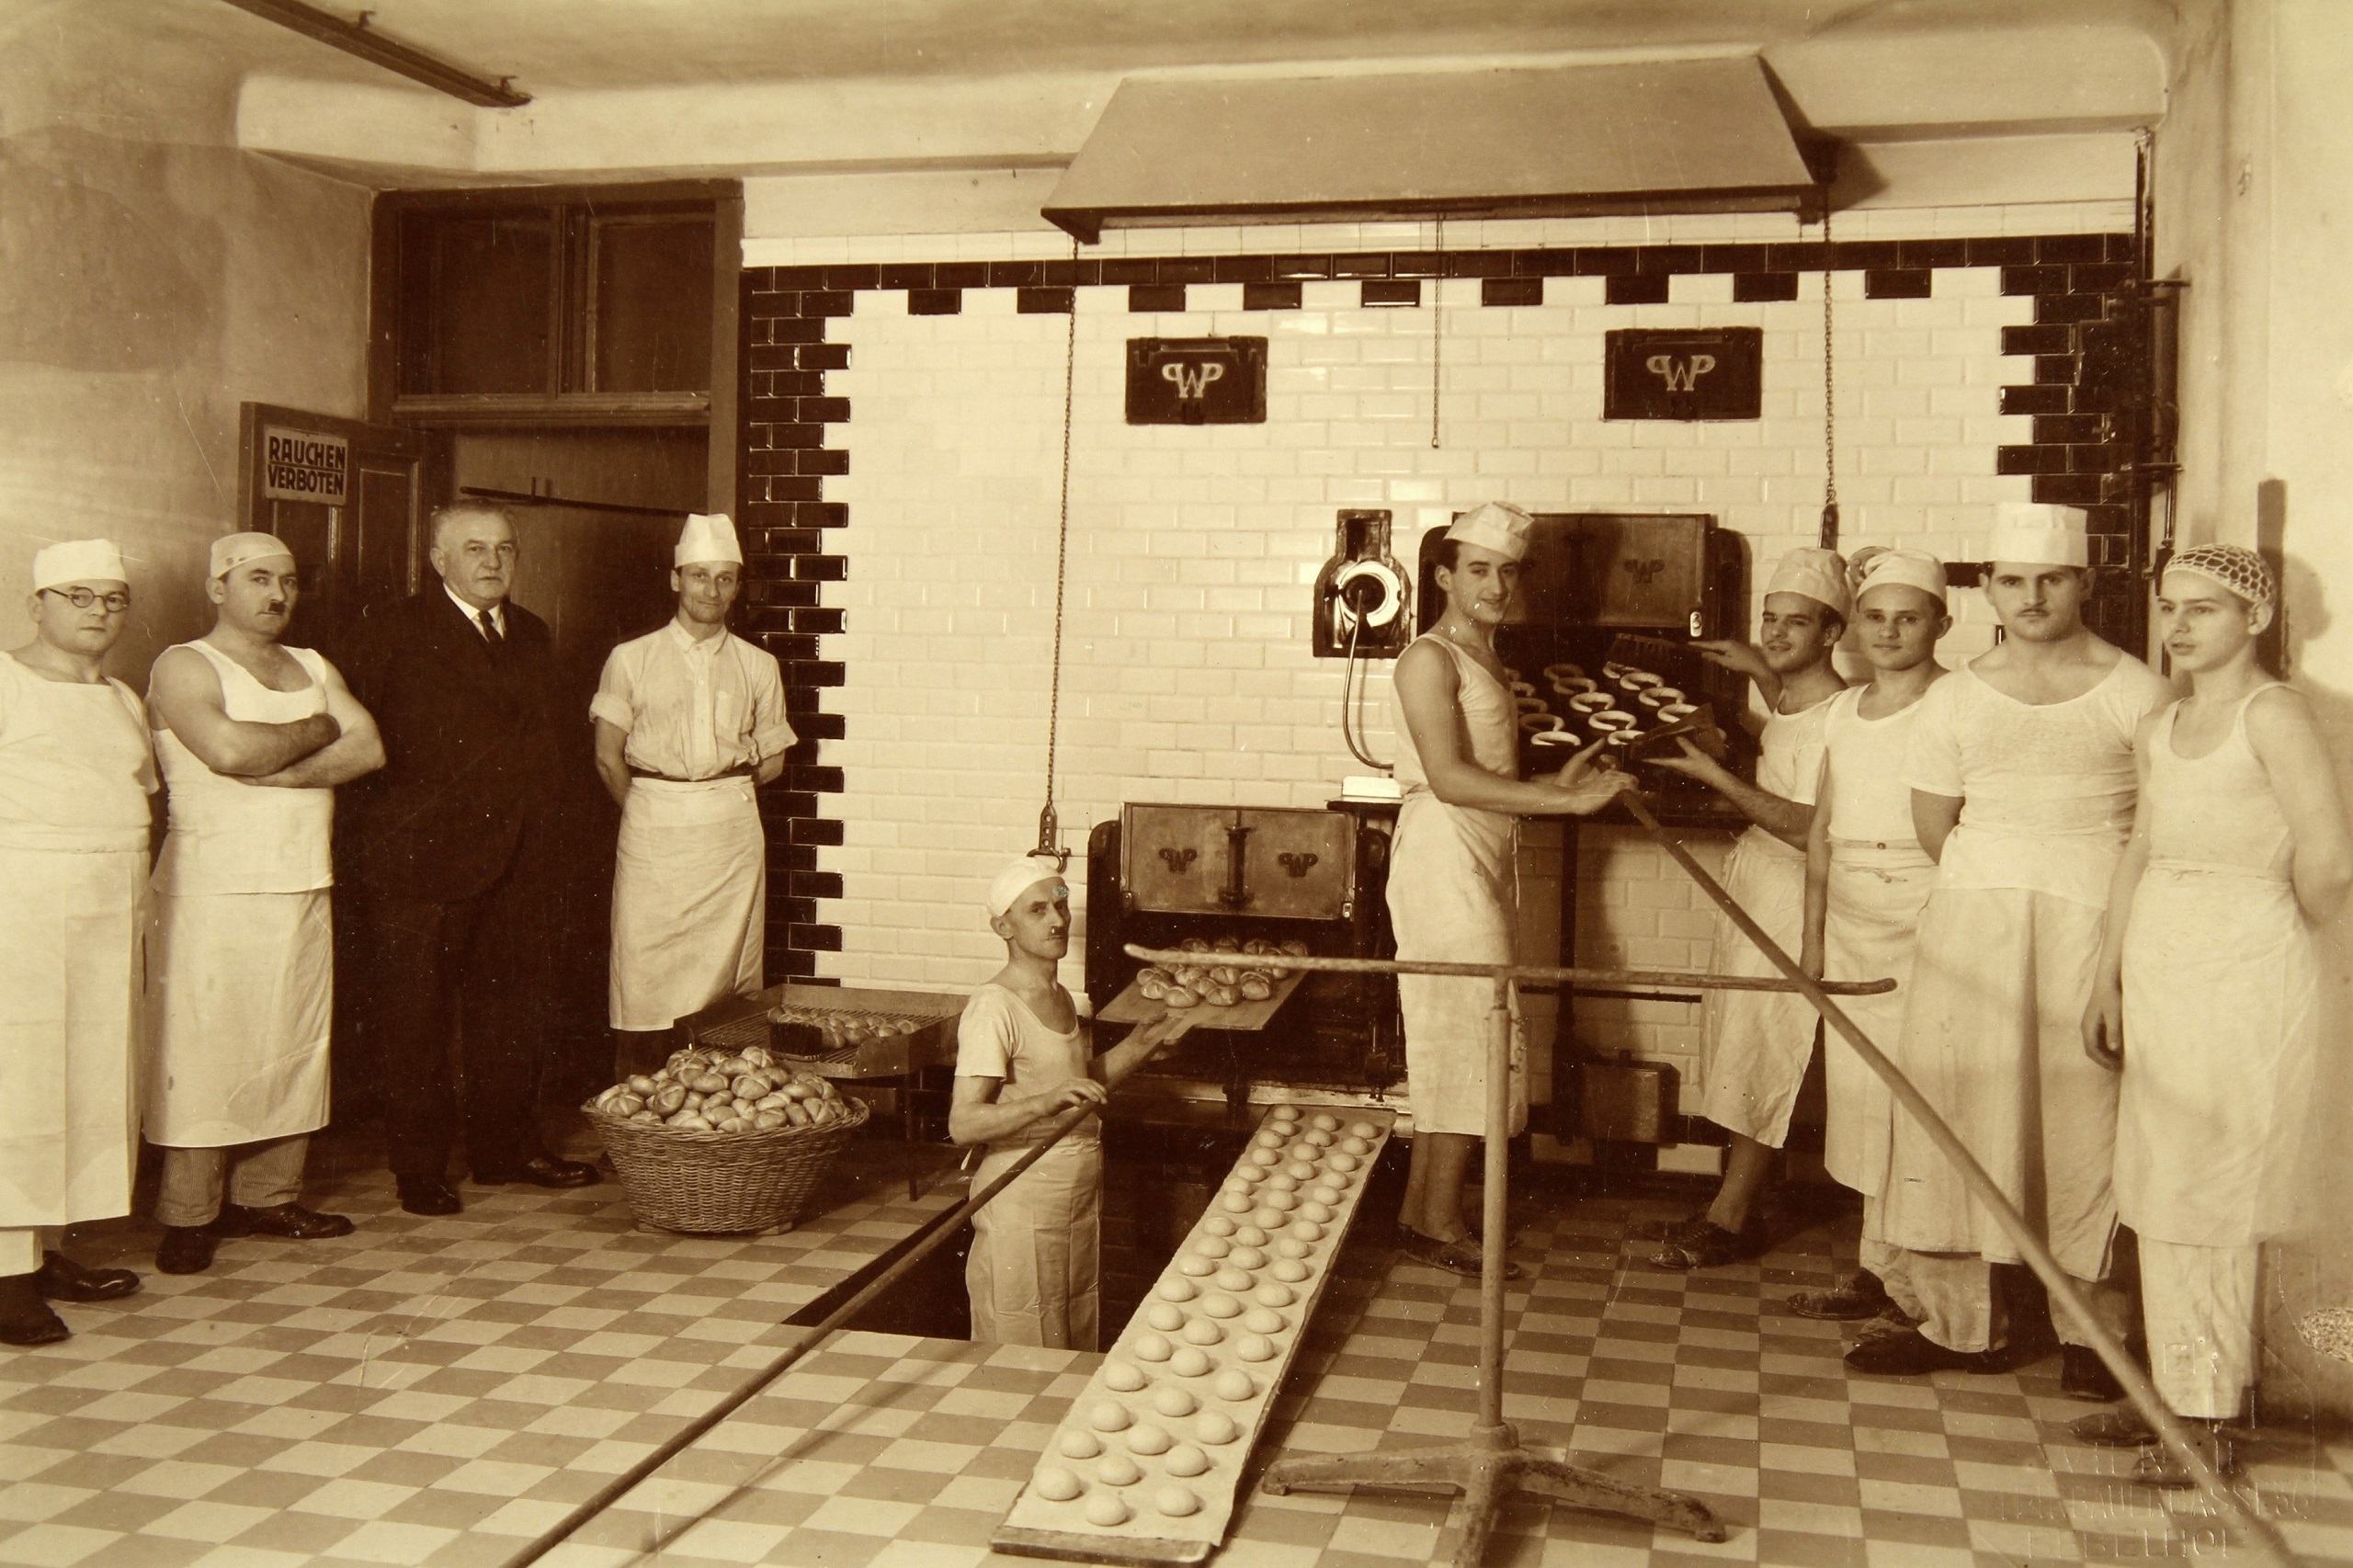 Brotbäcker in einer Bäckerei, 1925. Symbolbild für den hohen Brotpreis.